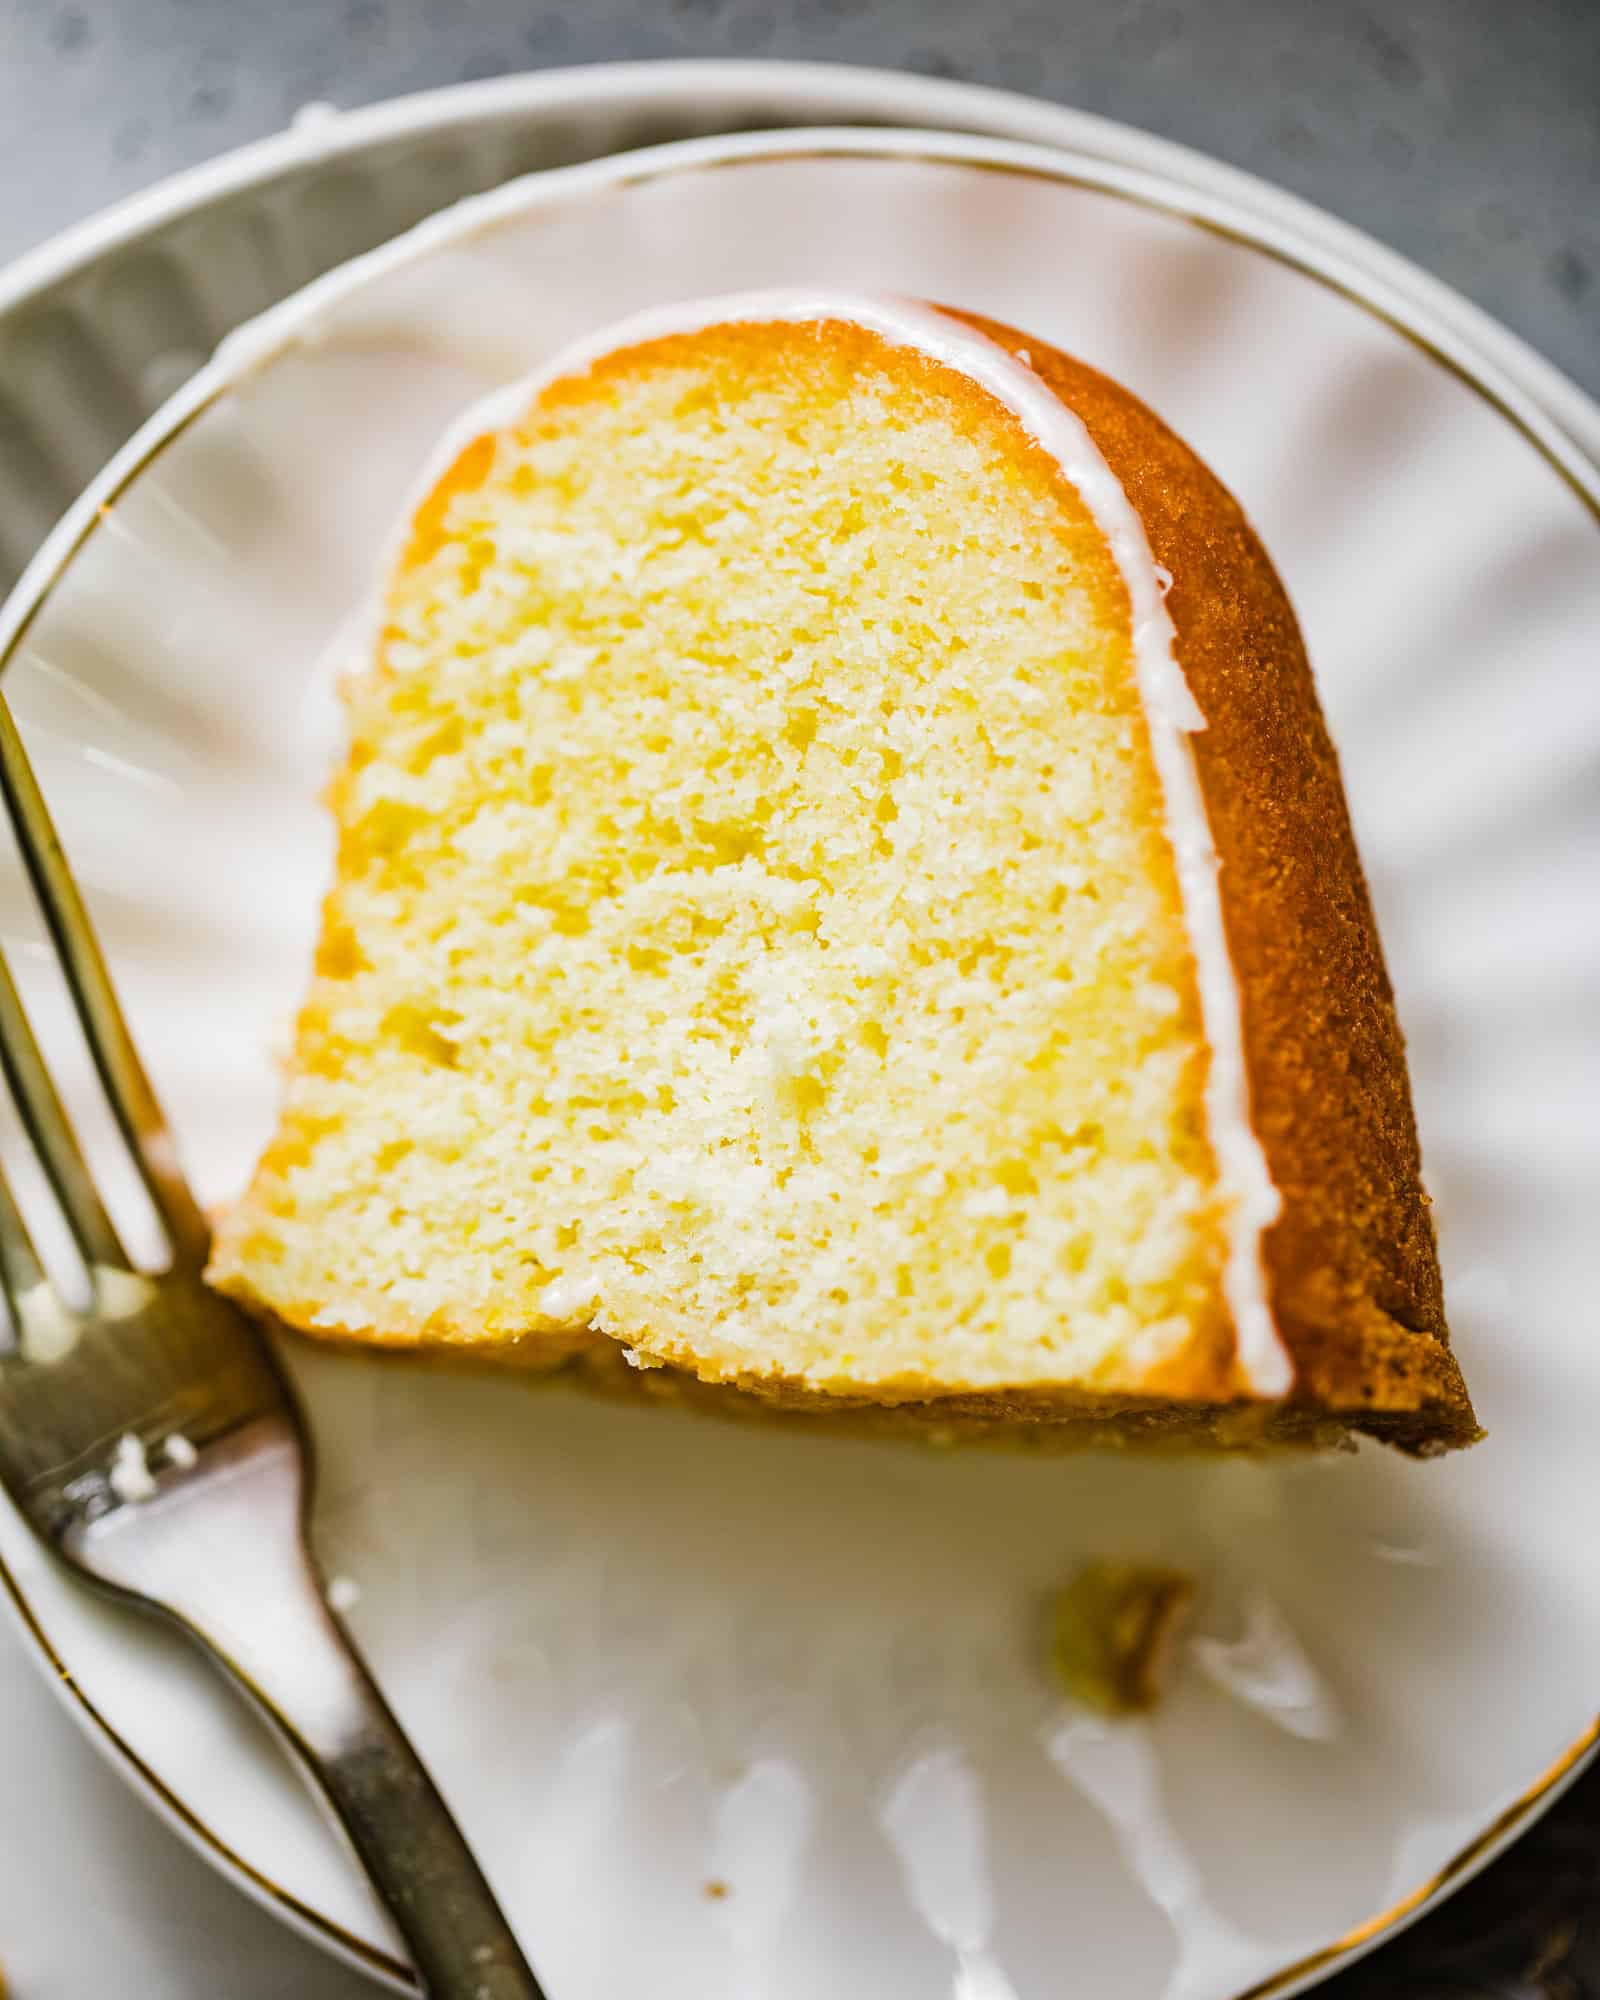 a slice of lemon pound cake on a plate with a fork.